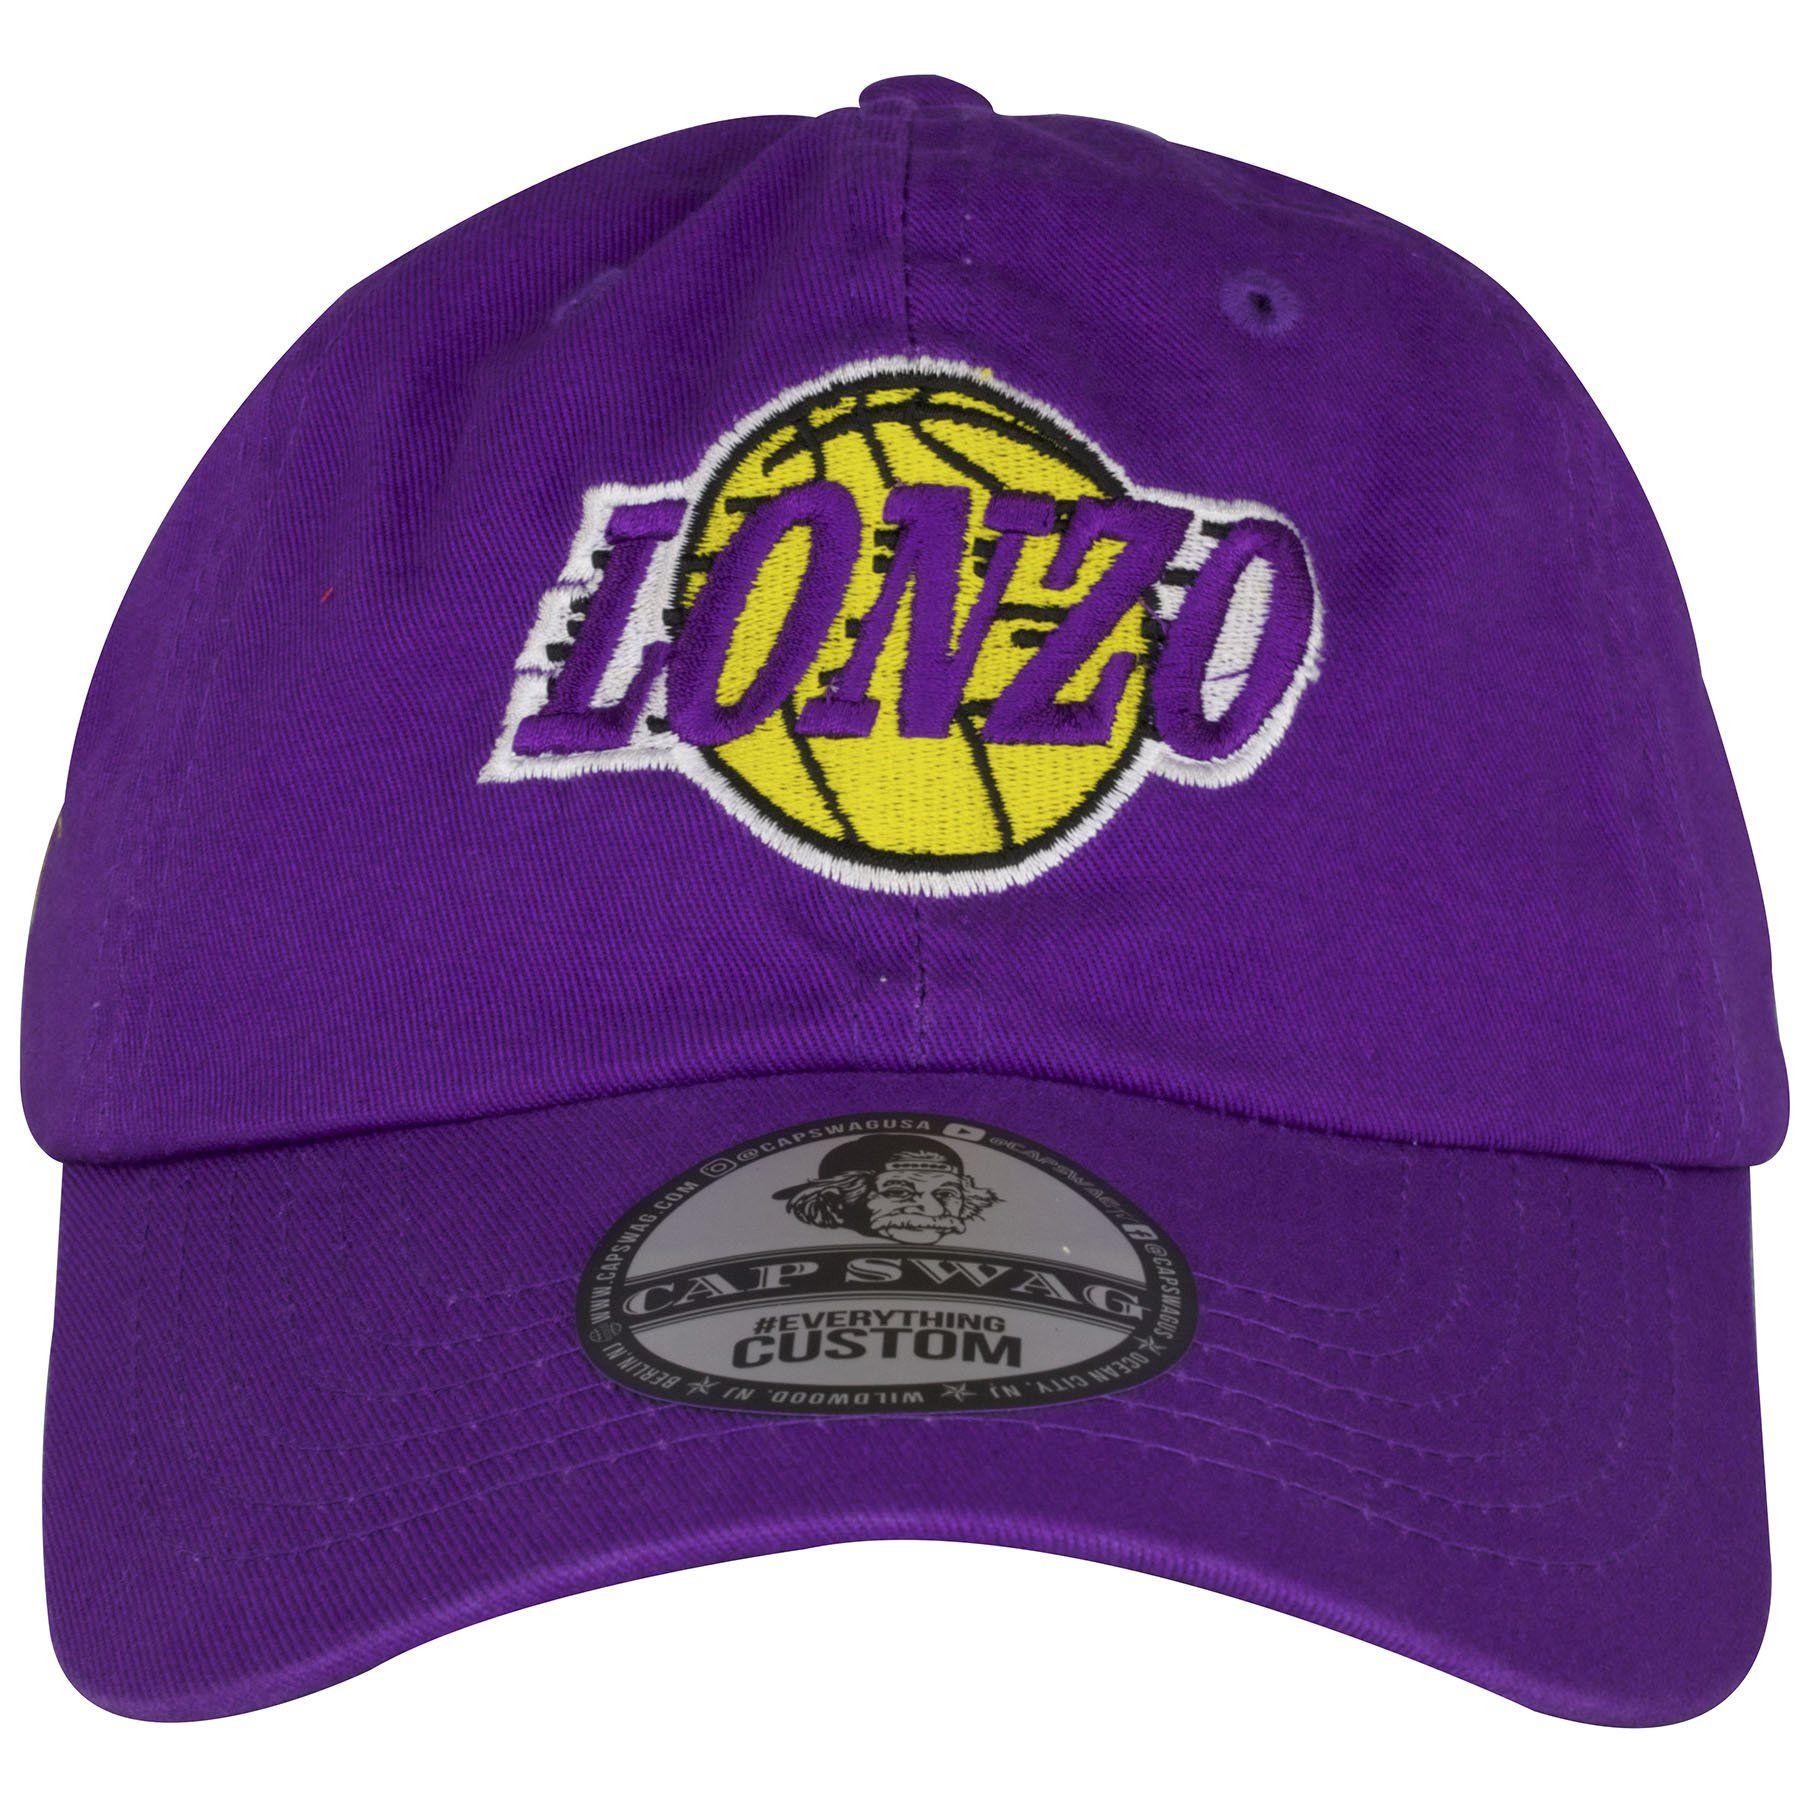 Ball Hat Logo - Los Angeles Lakers Lonzo Ball Purple Adjustable Dad Hat